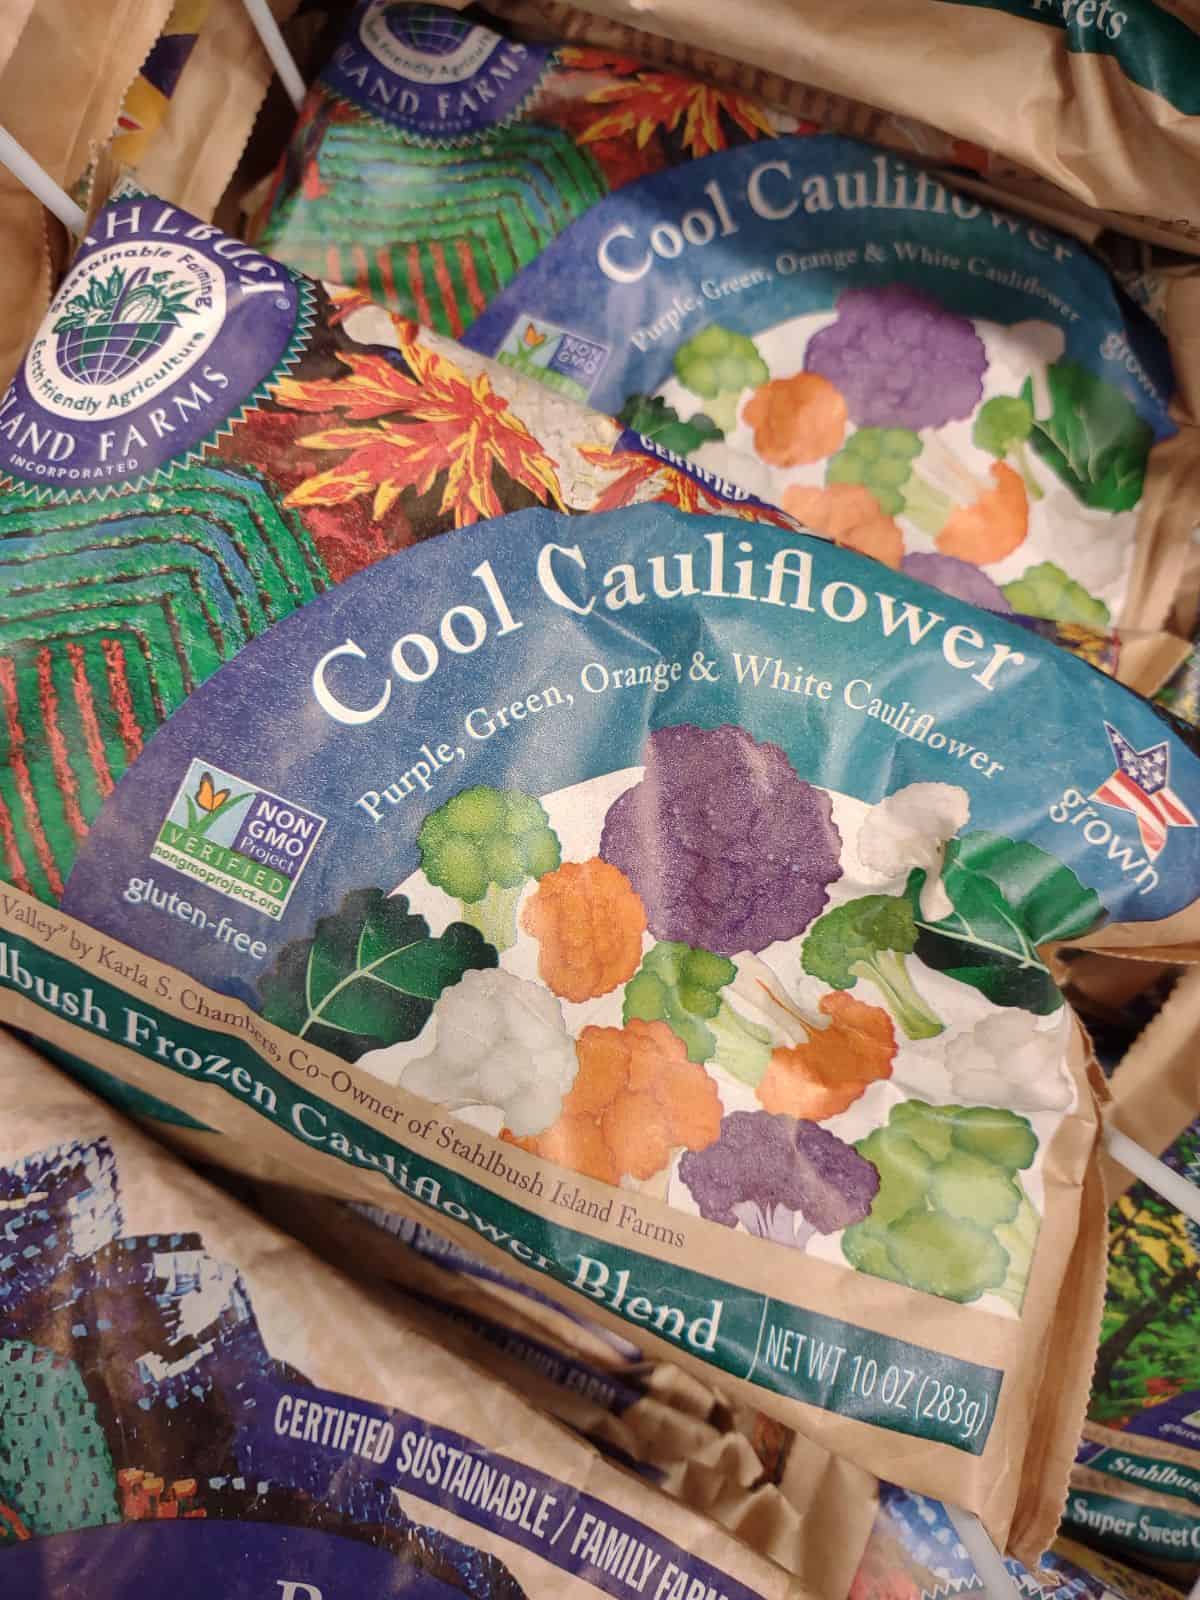 Stahlbush Island farms Cool Cauliflower in bags.